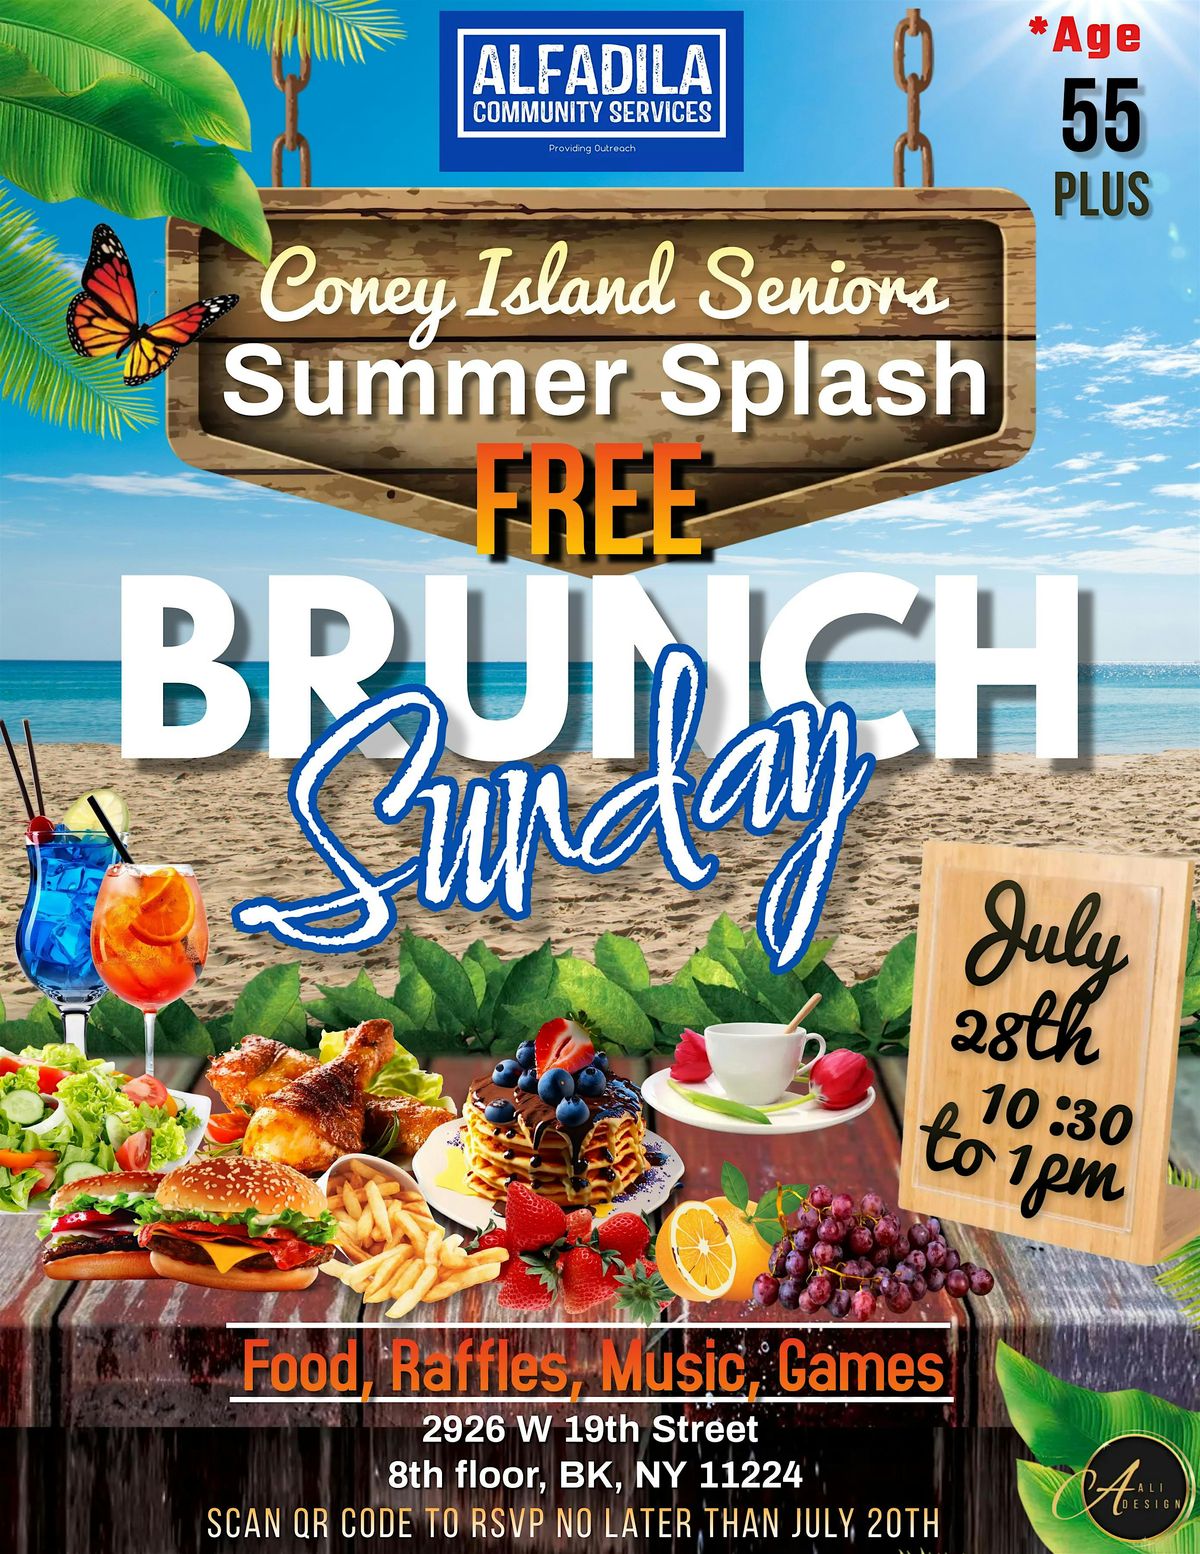 Sunday Brunch - Coney Island Seniors Summer Splash